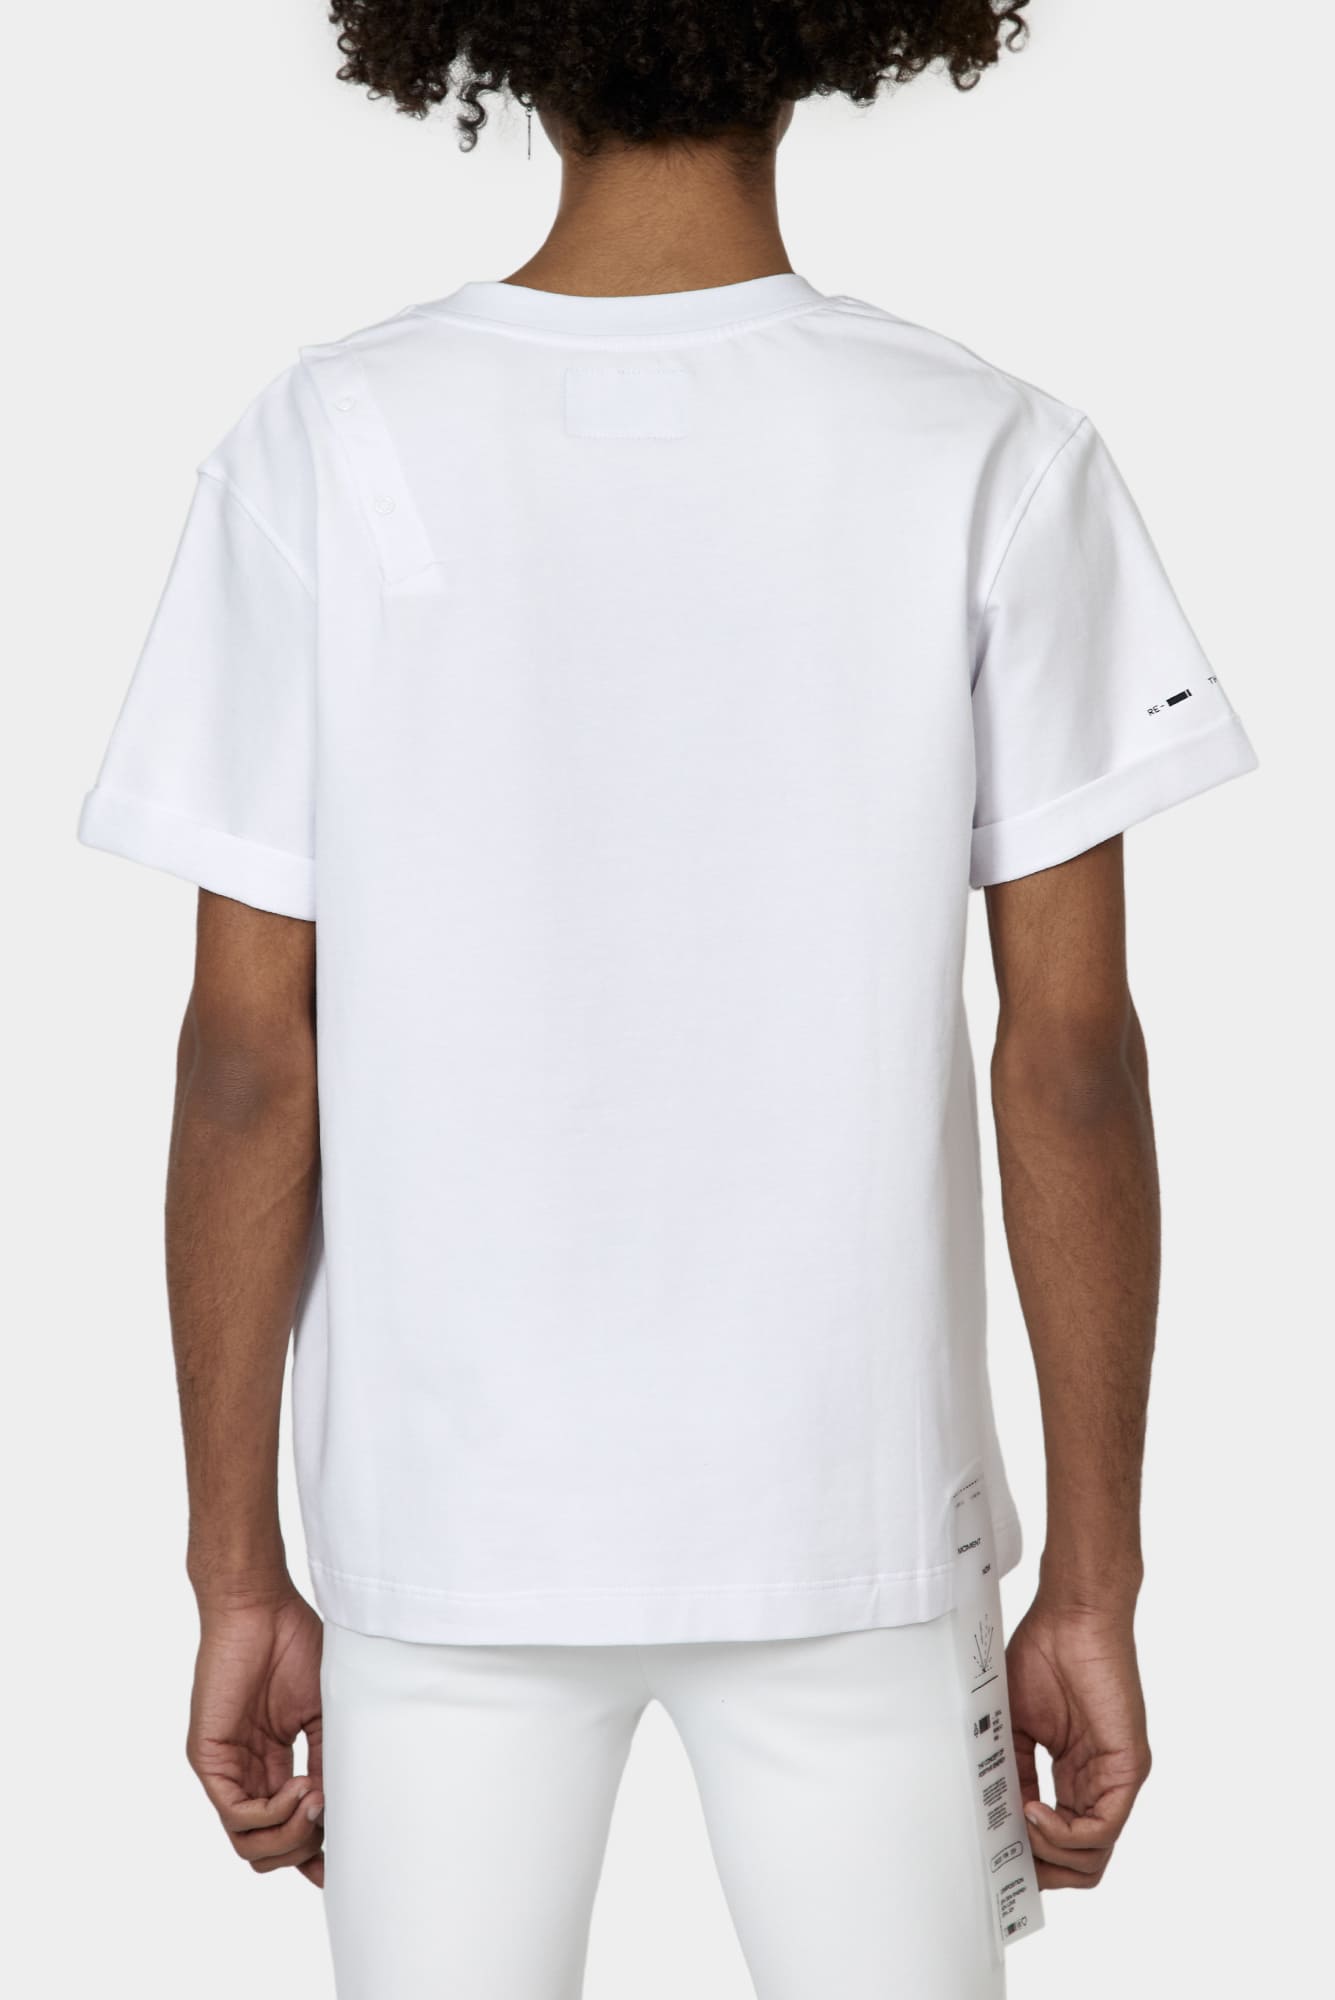 White T-shirt CHOISE for JOY